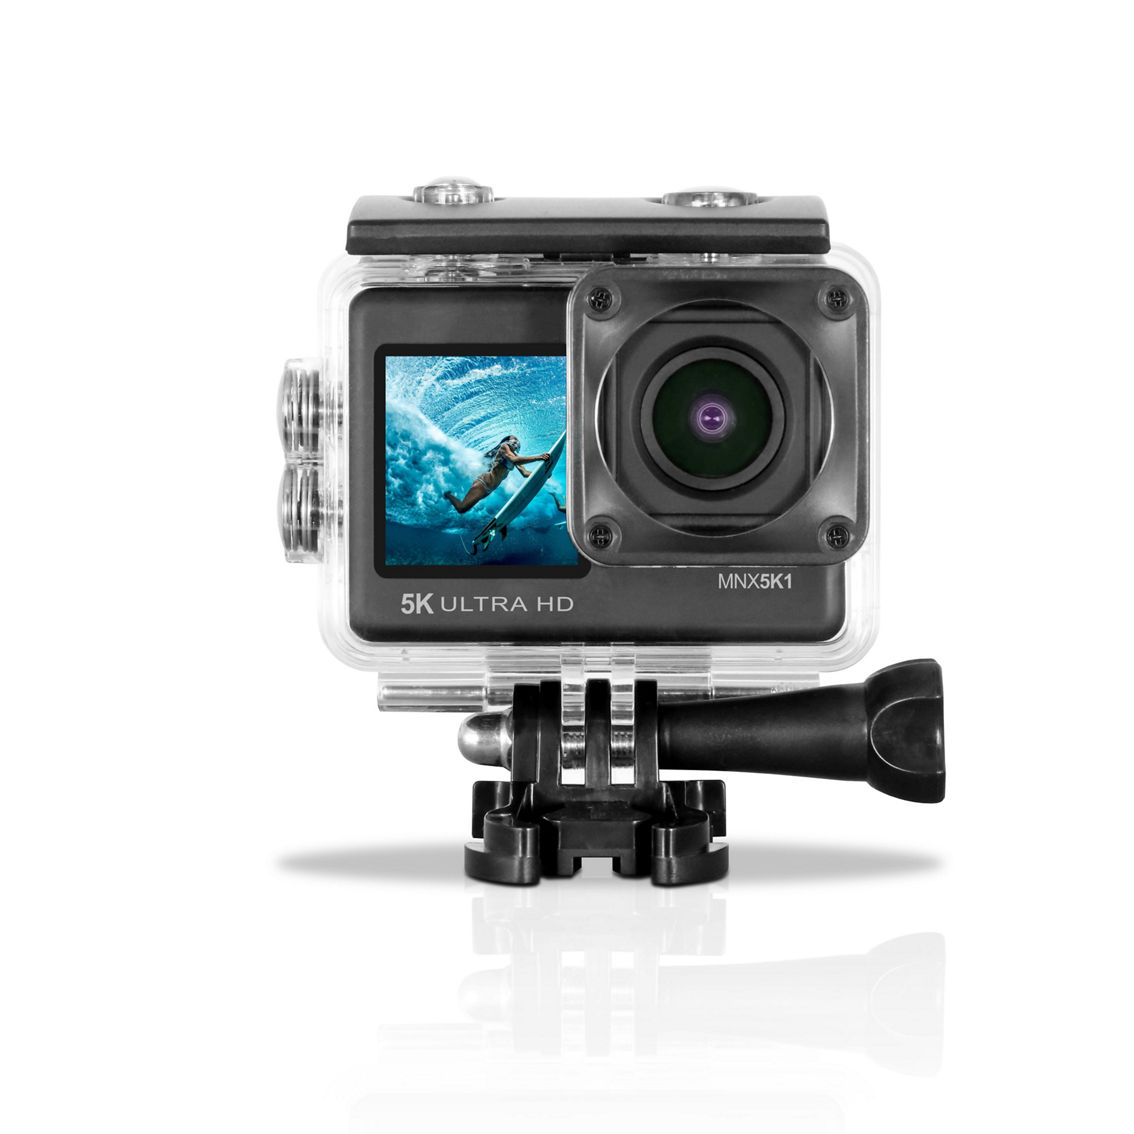 Minolta MNX5K1 5K Ultra HD / 24 MP Action Camera Kit with Waterproof Case - Image 2 of 5